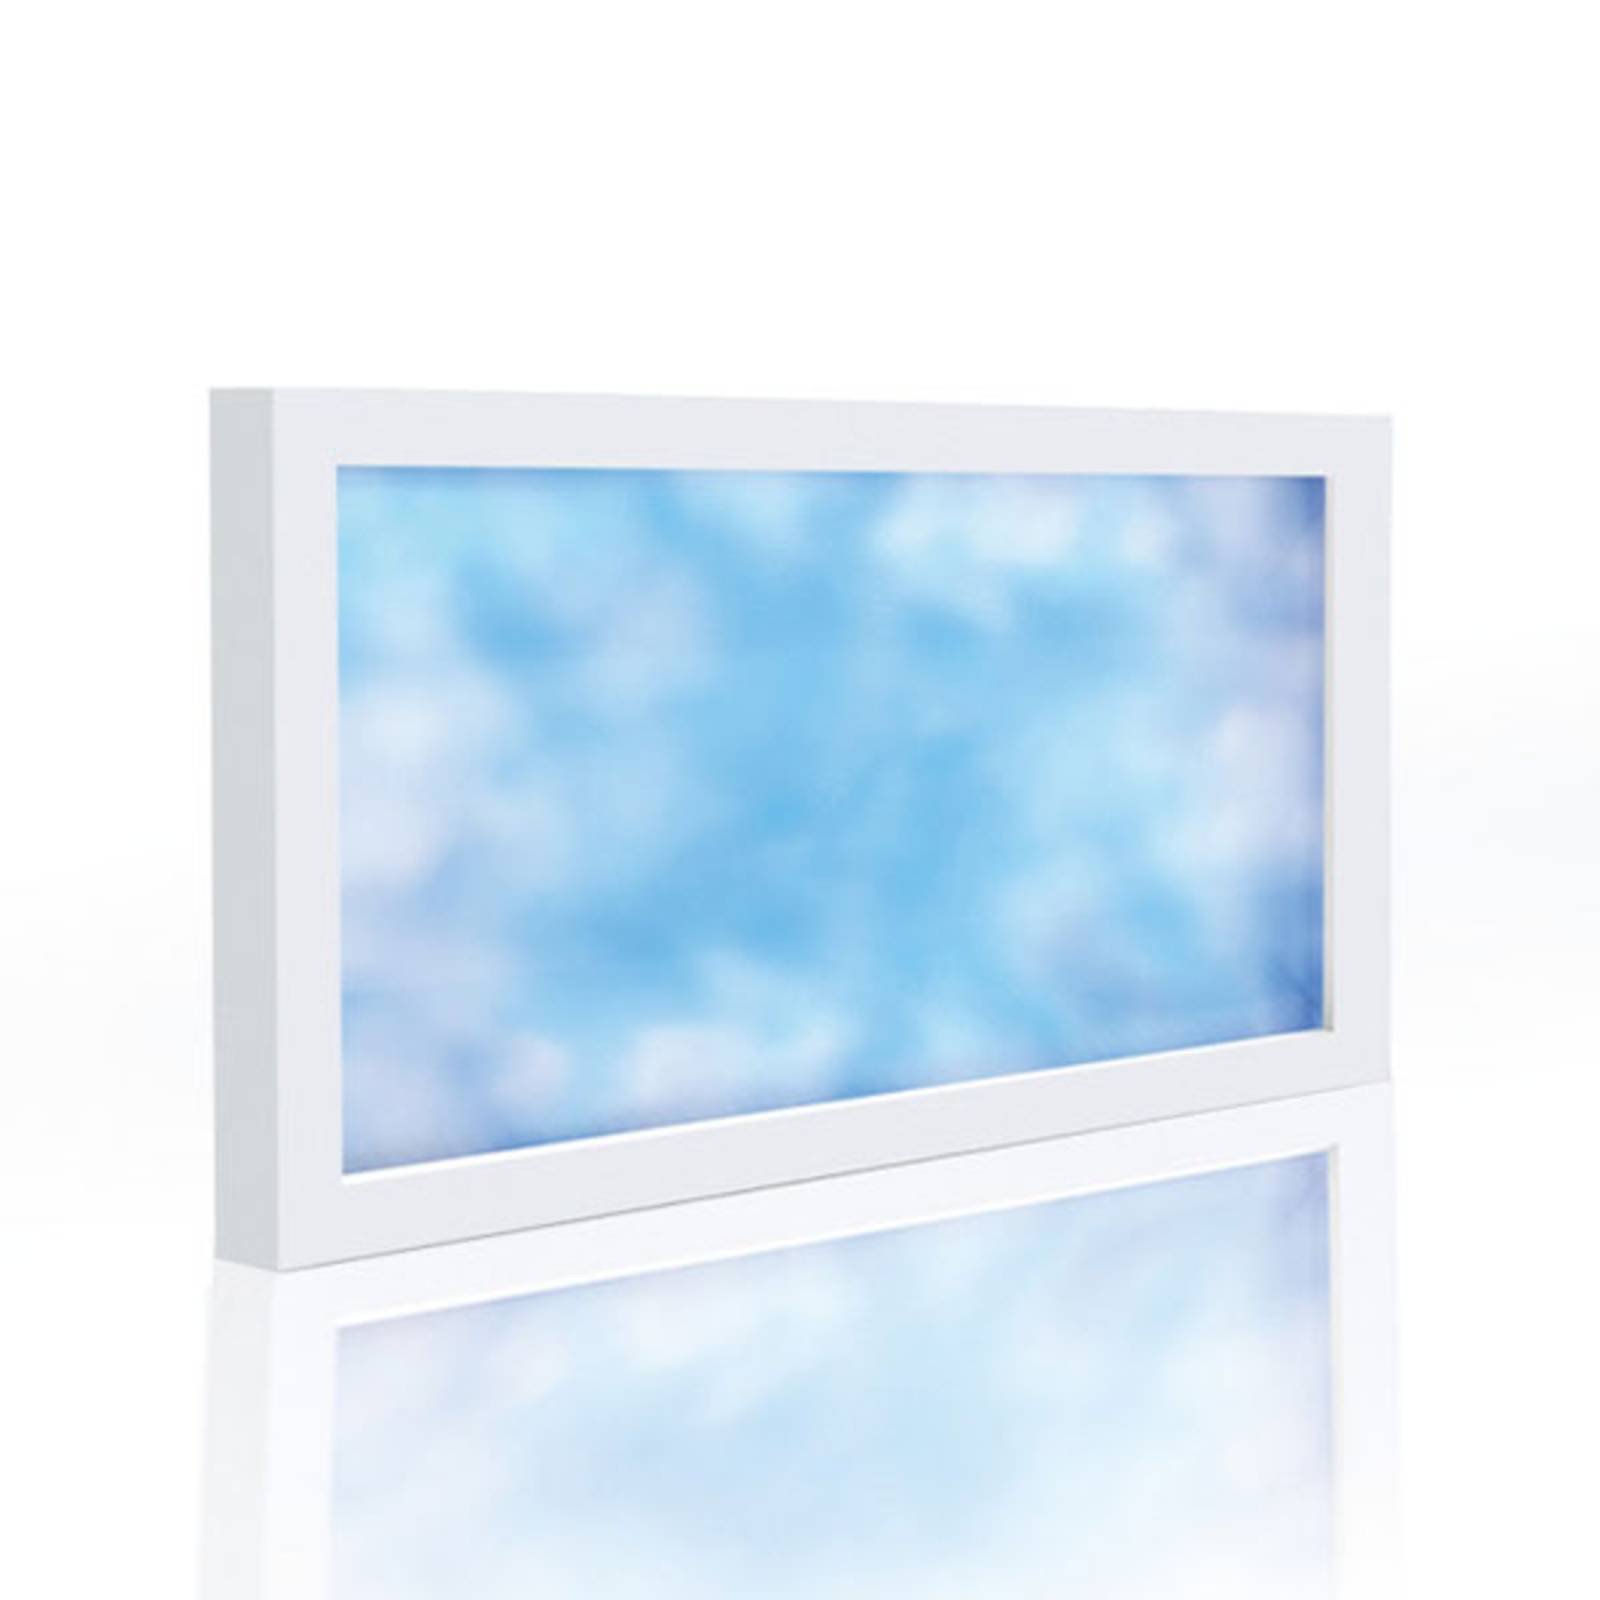 Image of Hera Pannello LED Sky Window 120 x 60 cm